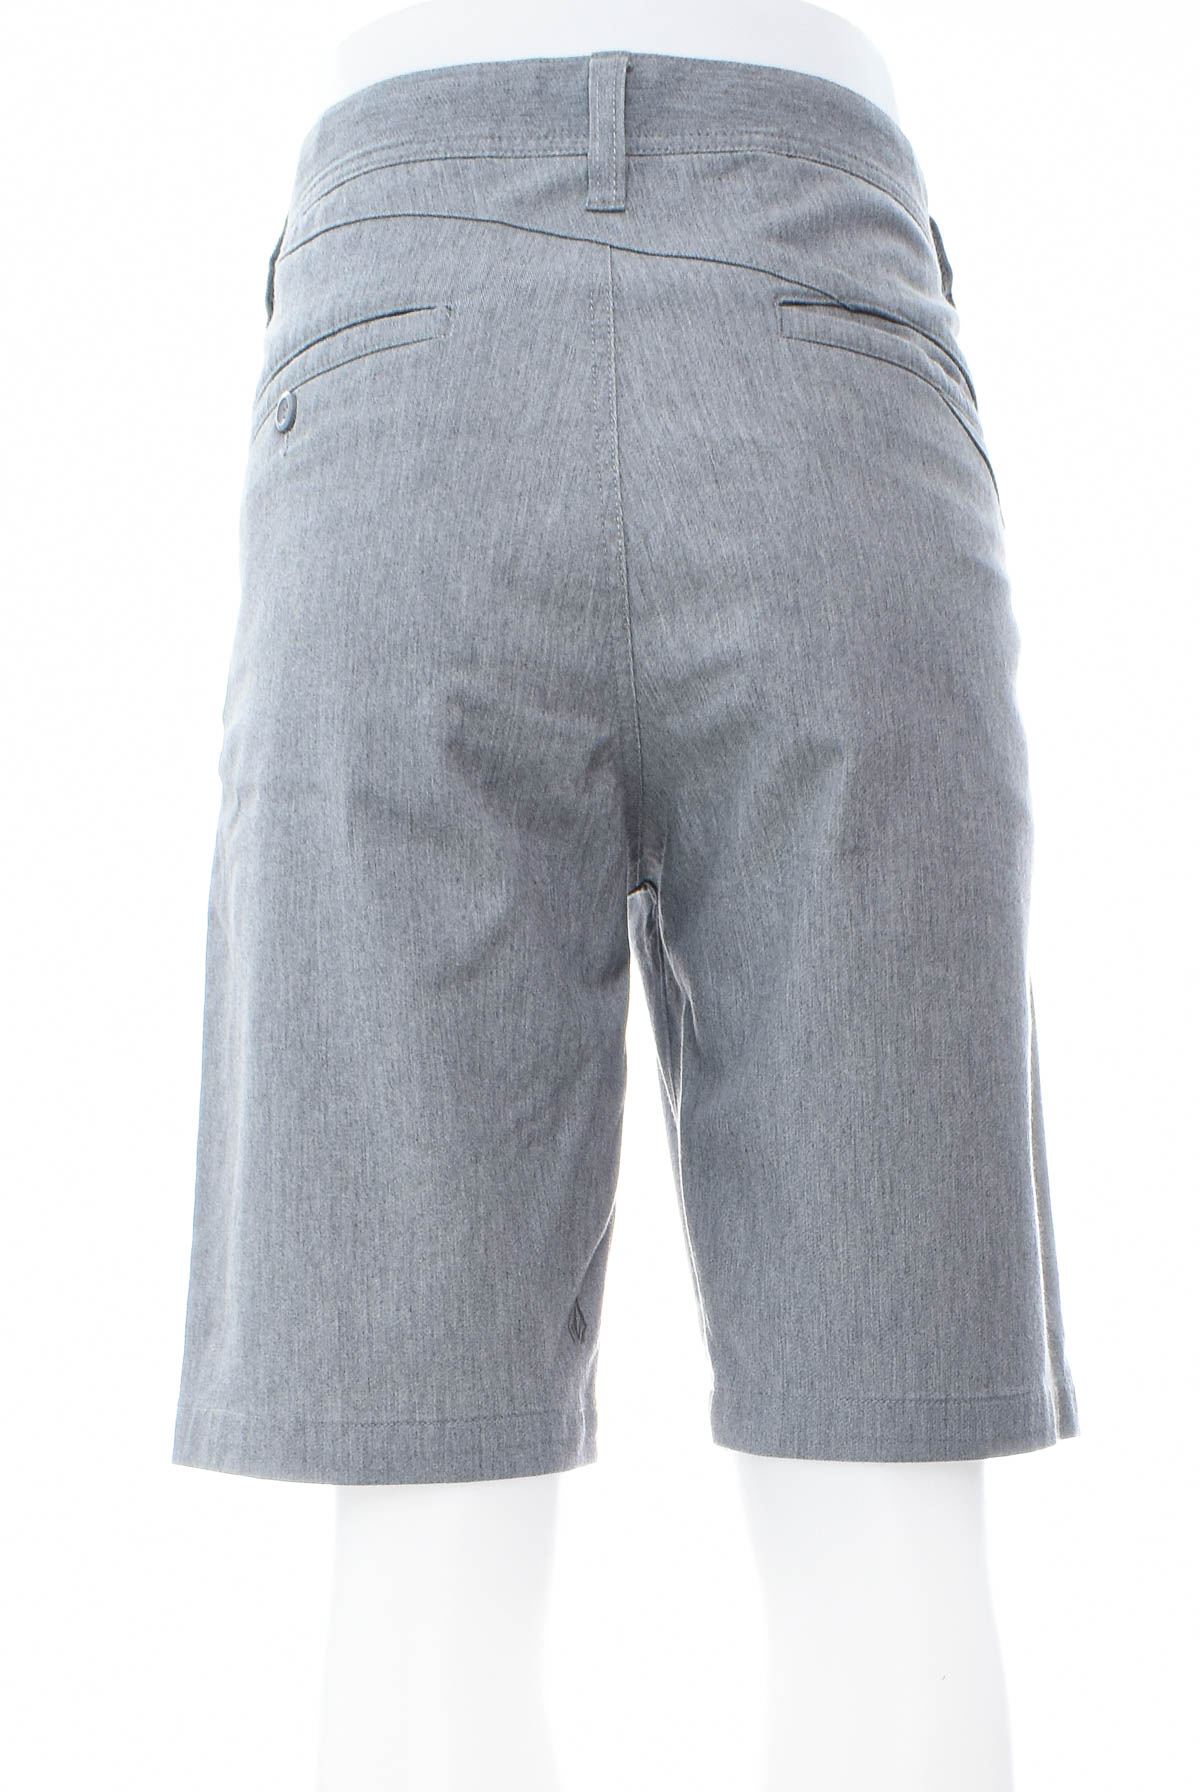 Men's shorts - Volcom - 1